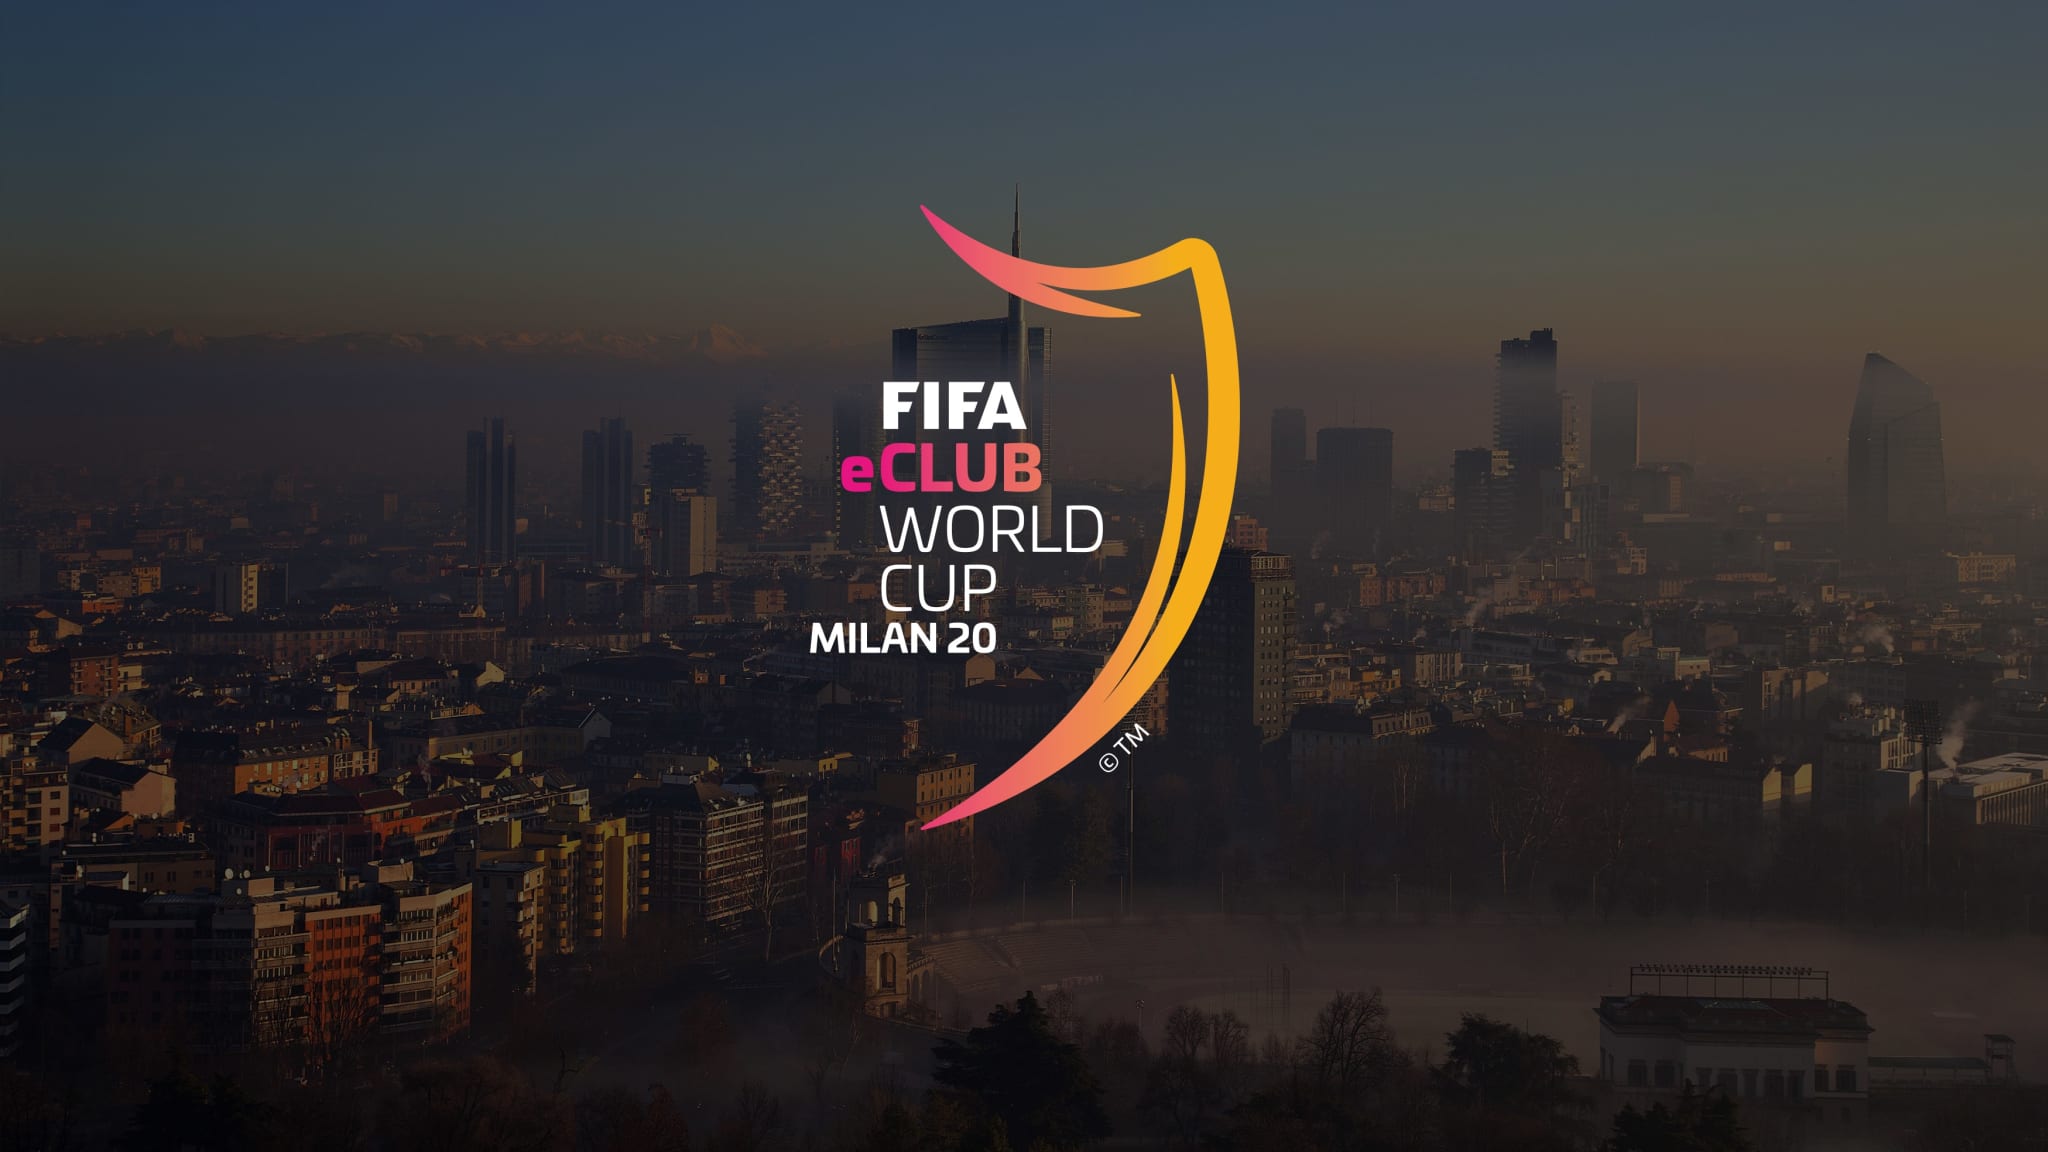 FIFA eClub World Cup 2020 Milan